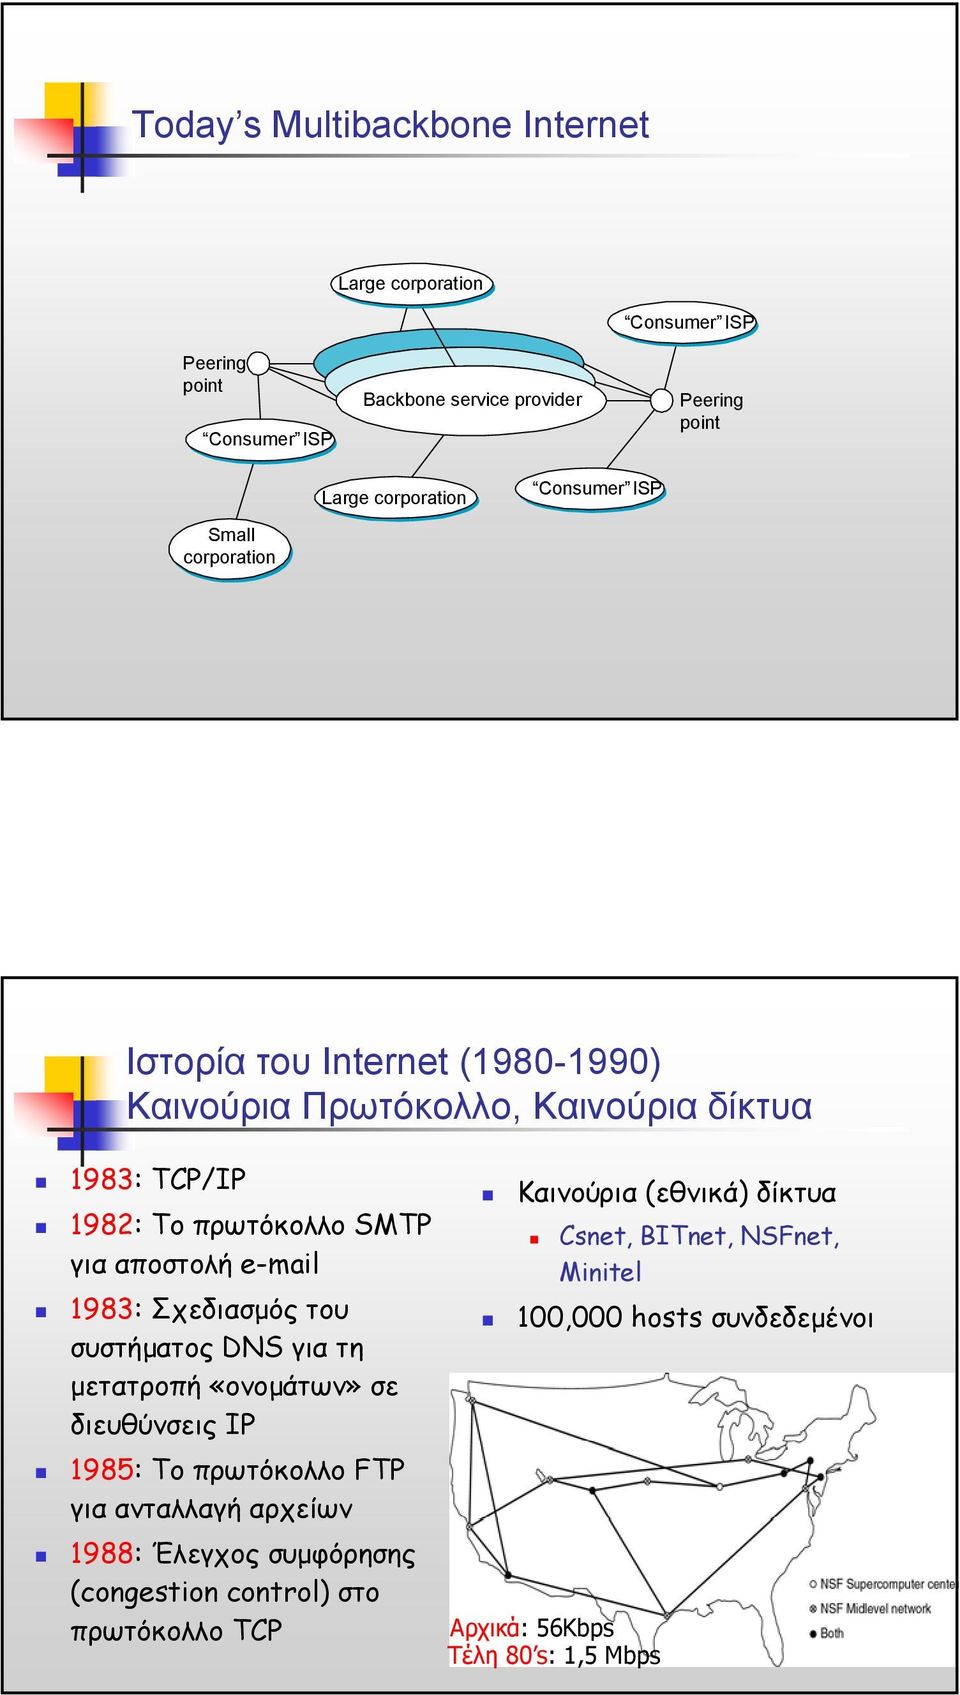 e-mail 1983: Σχεδιασµός του συστήµατος DNS για τη µετατροπή «ονοµάτων» σε διευθύνσεις IP 1985: To πρωτόκολλο FTP για ανταλλαγή αρχείων 1988: Έλεγχος